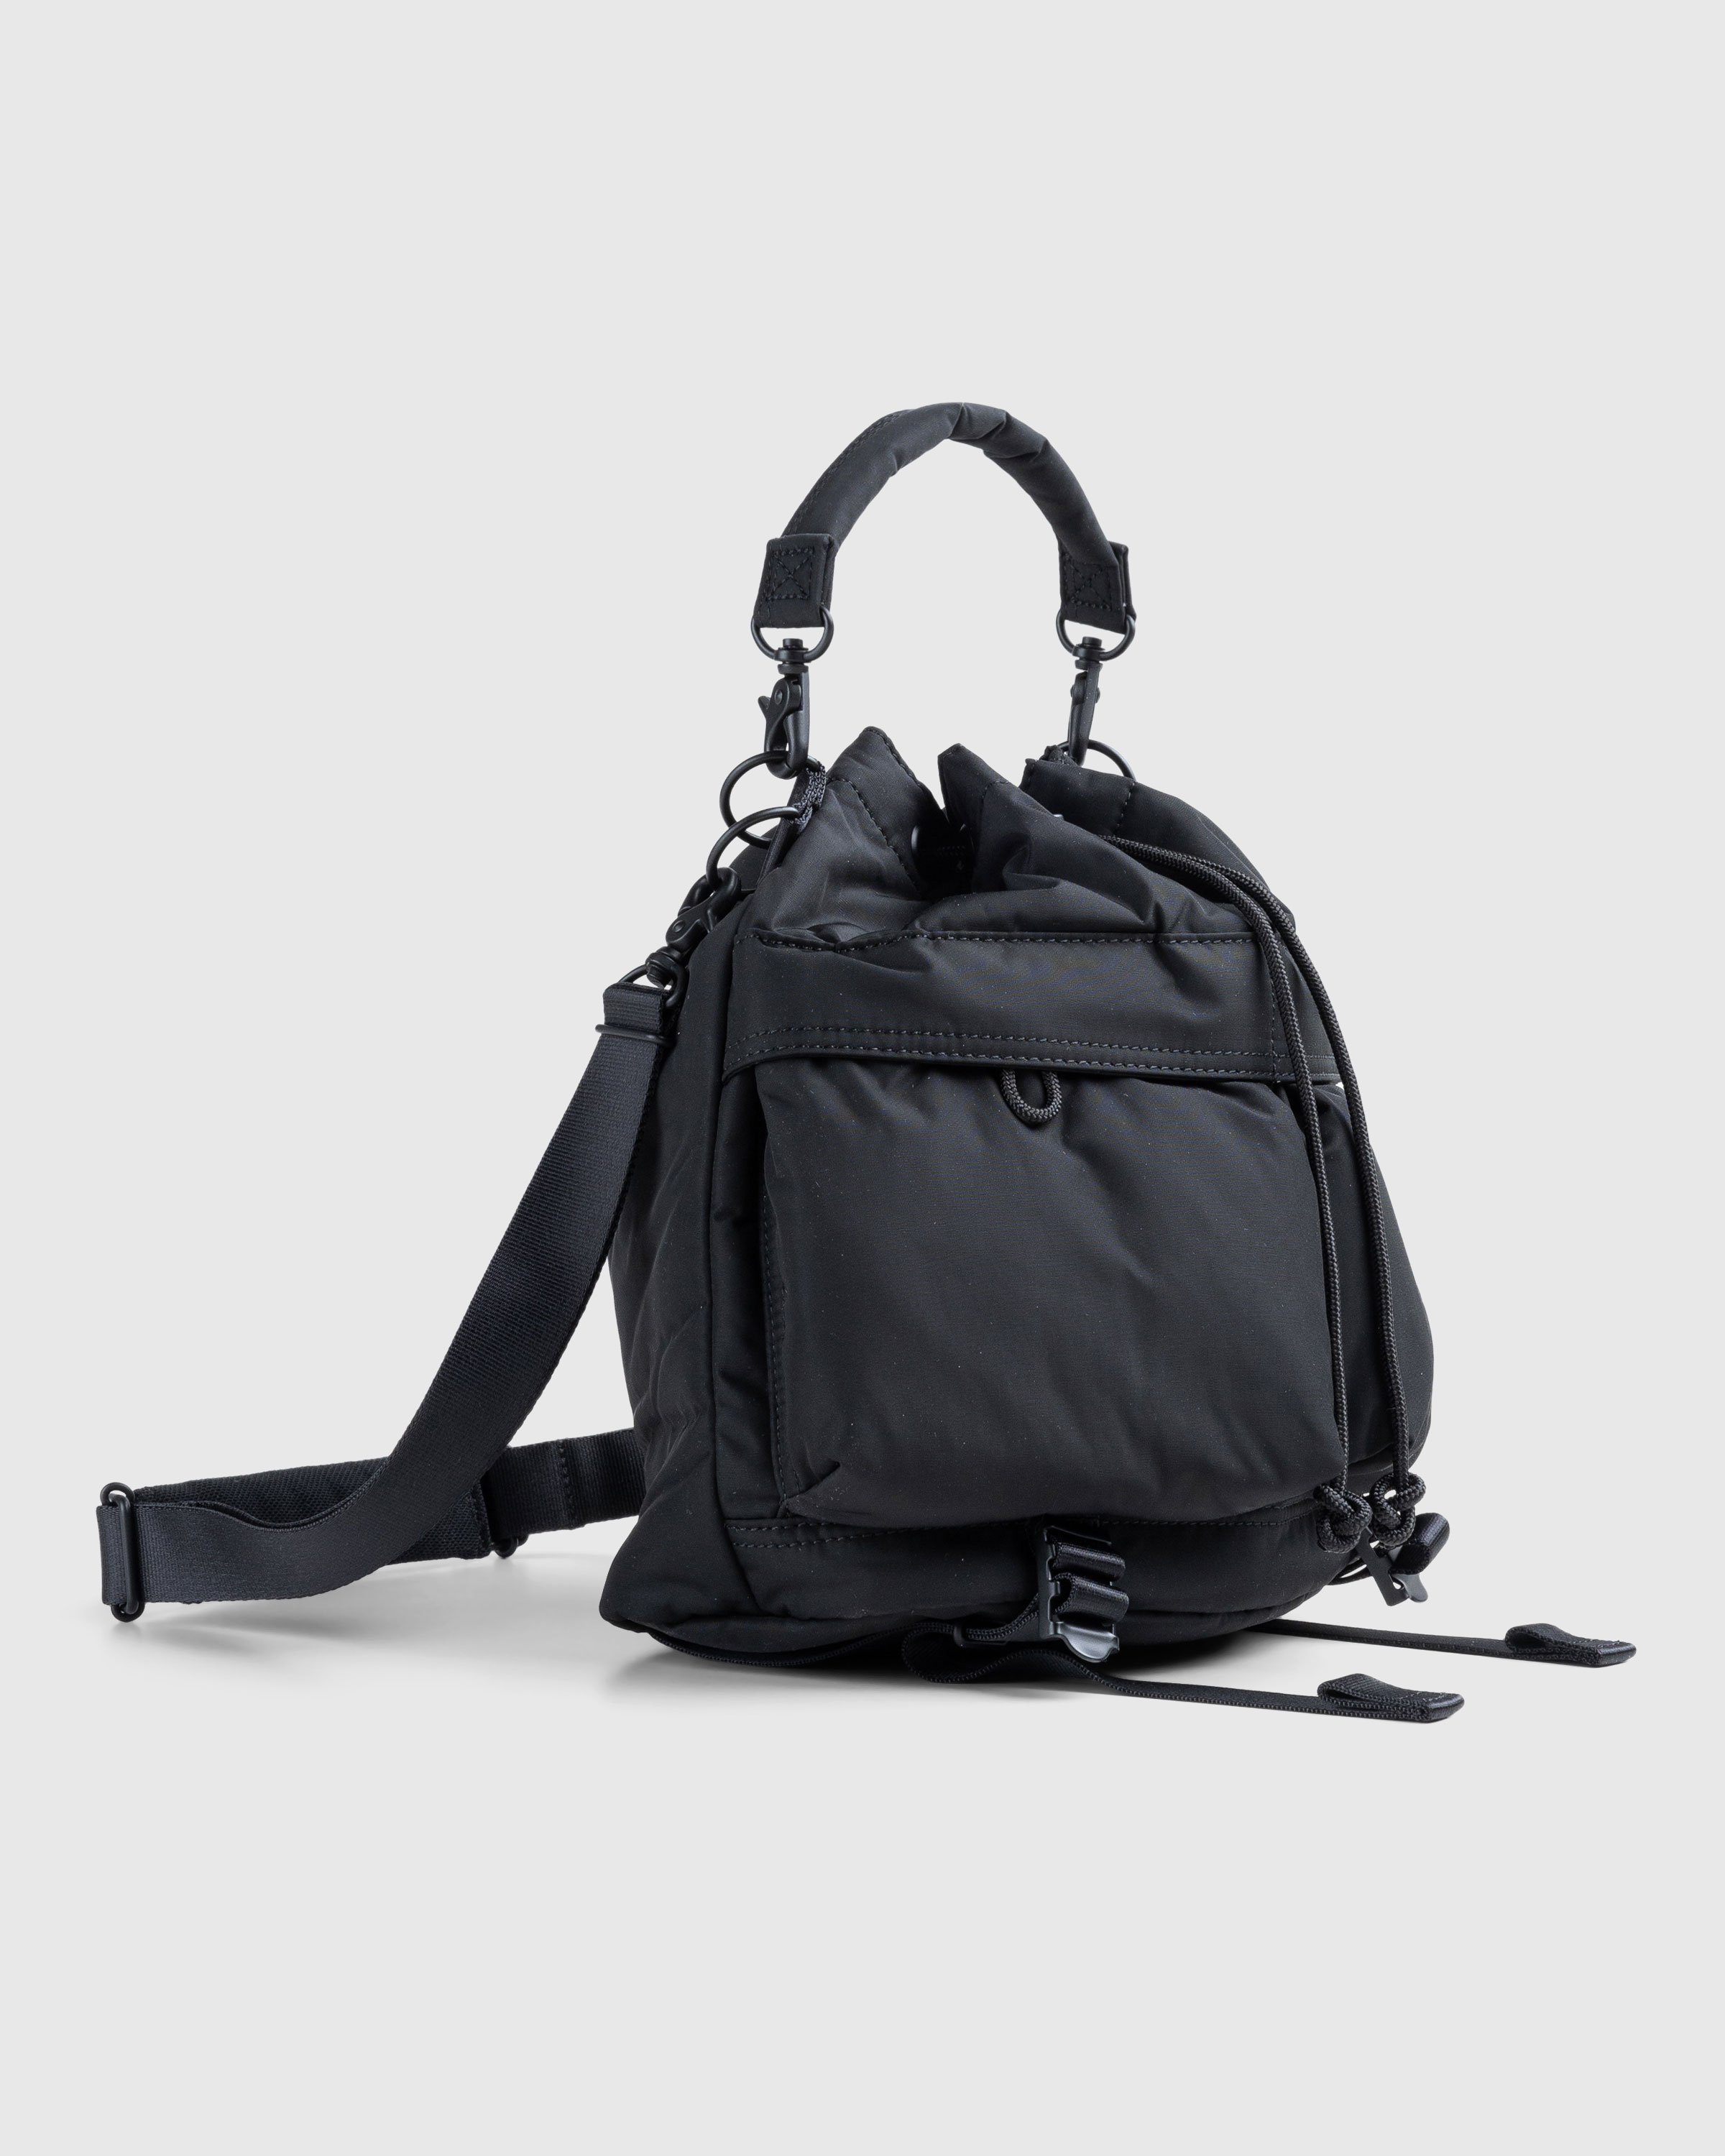 Porter-Yoshida & Co. - SENSES TOOL BAG - Accessories - Black - Image 3